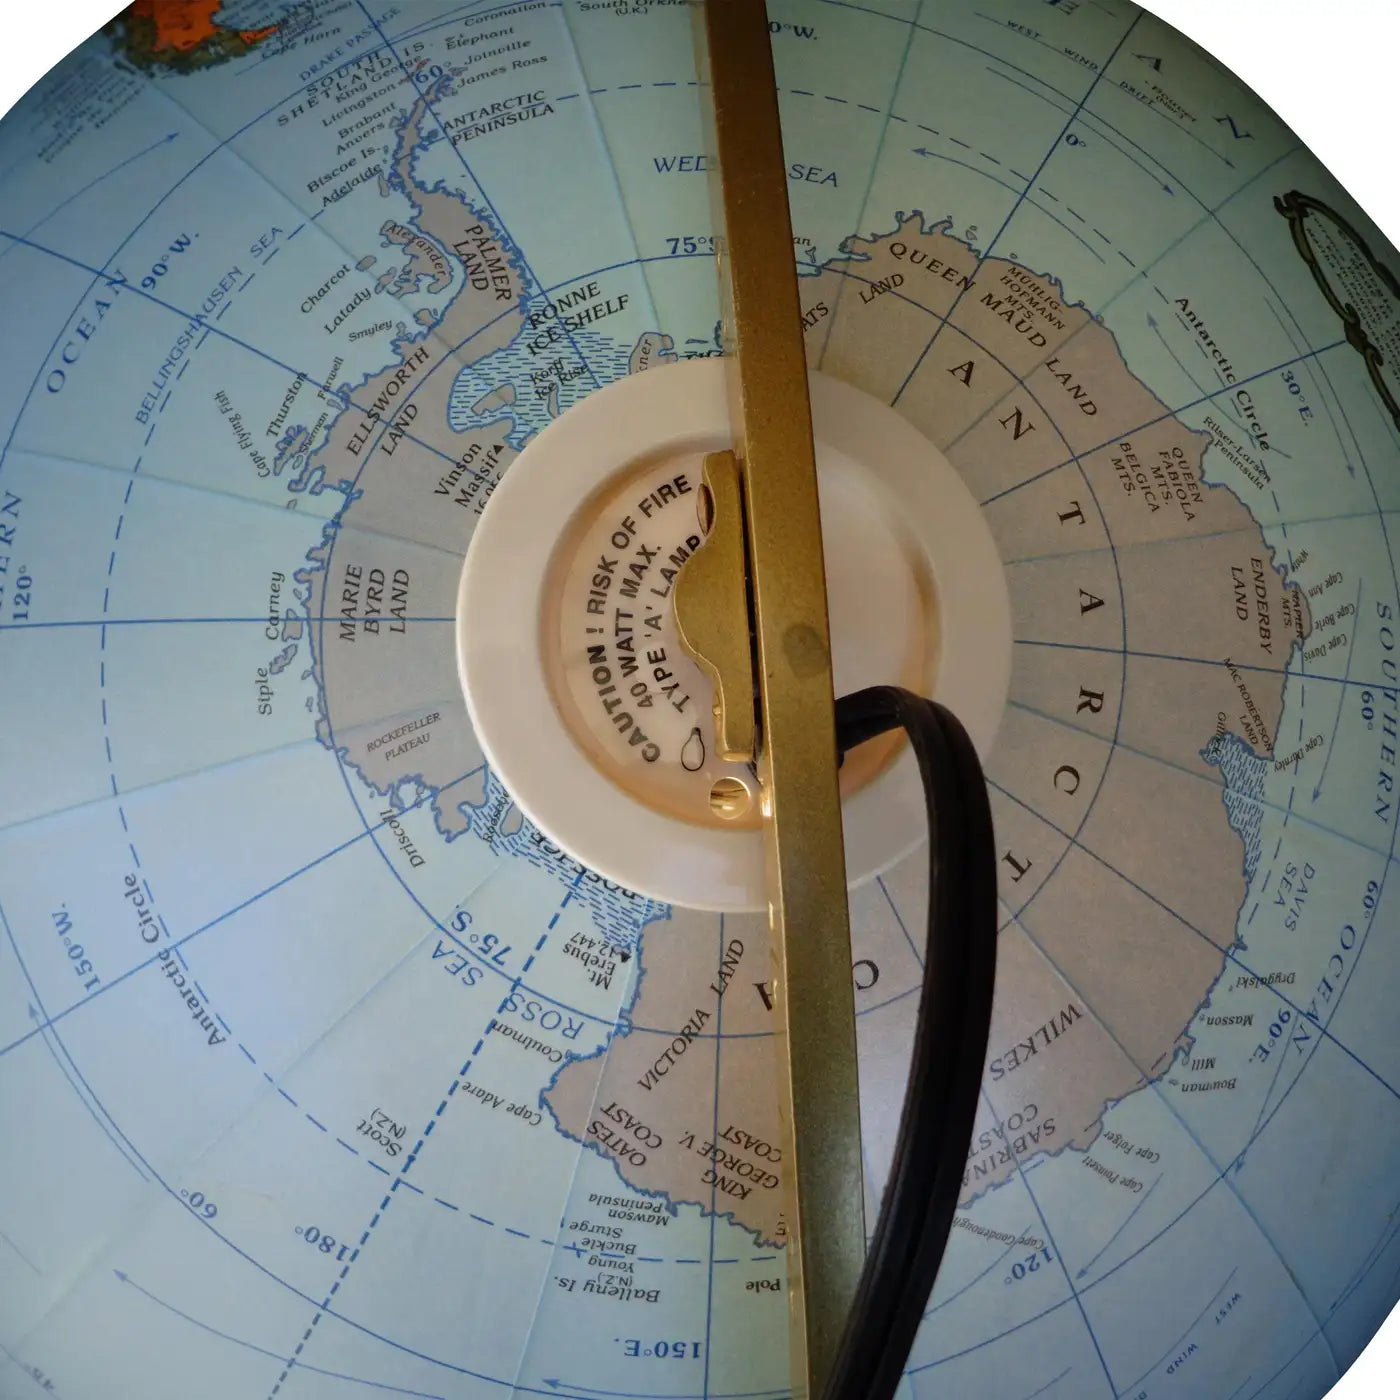 Heirloom Globe by Replogle